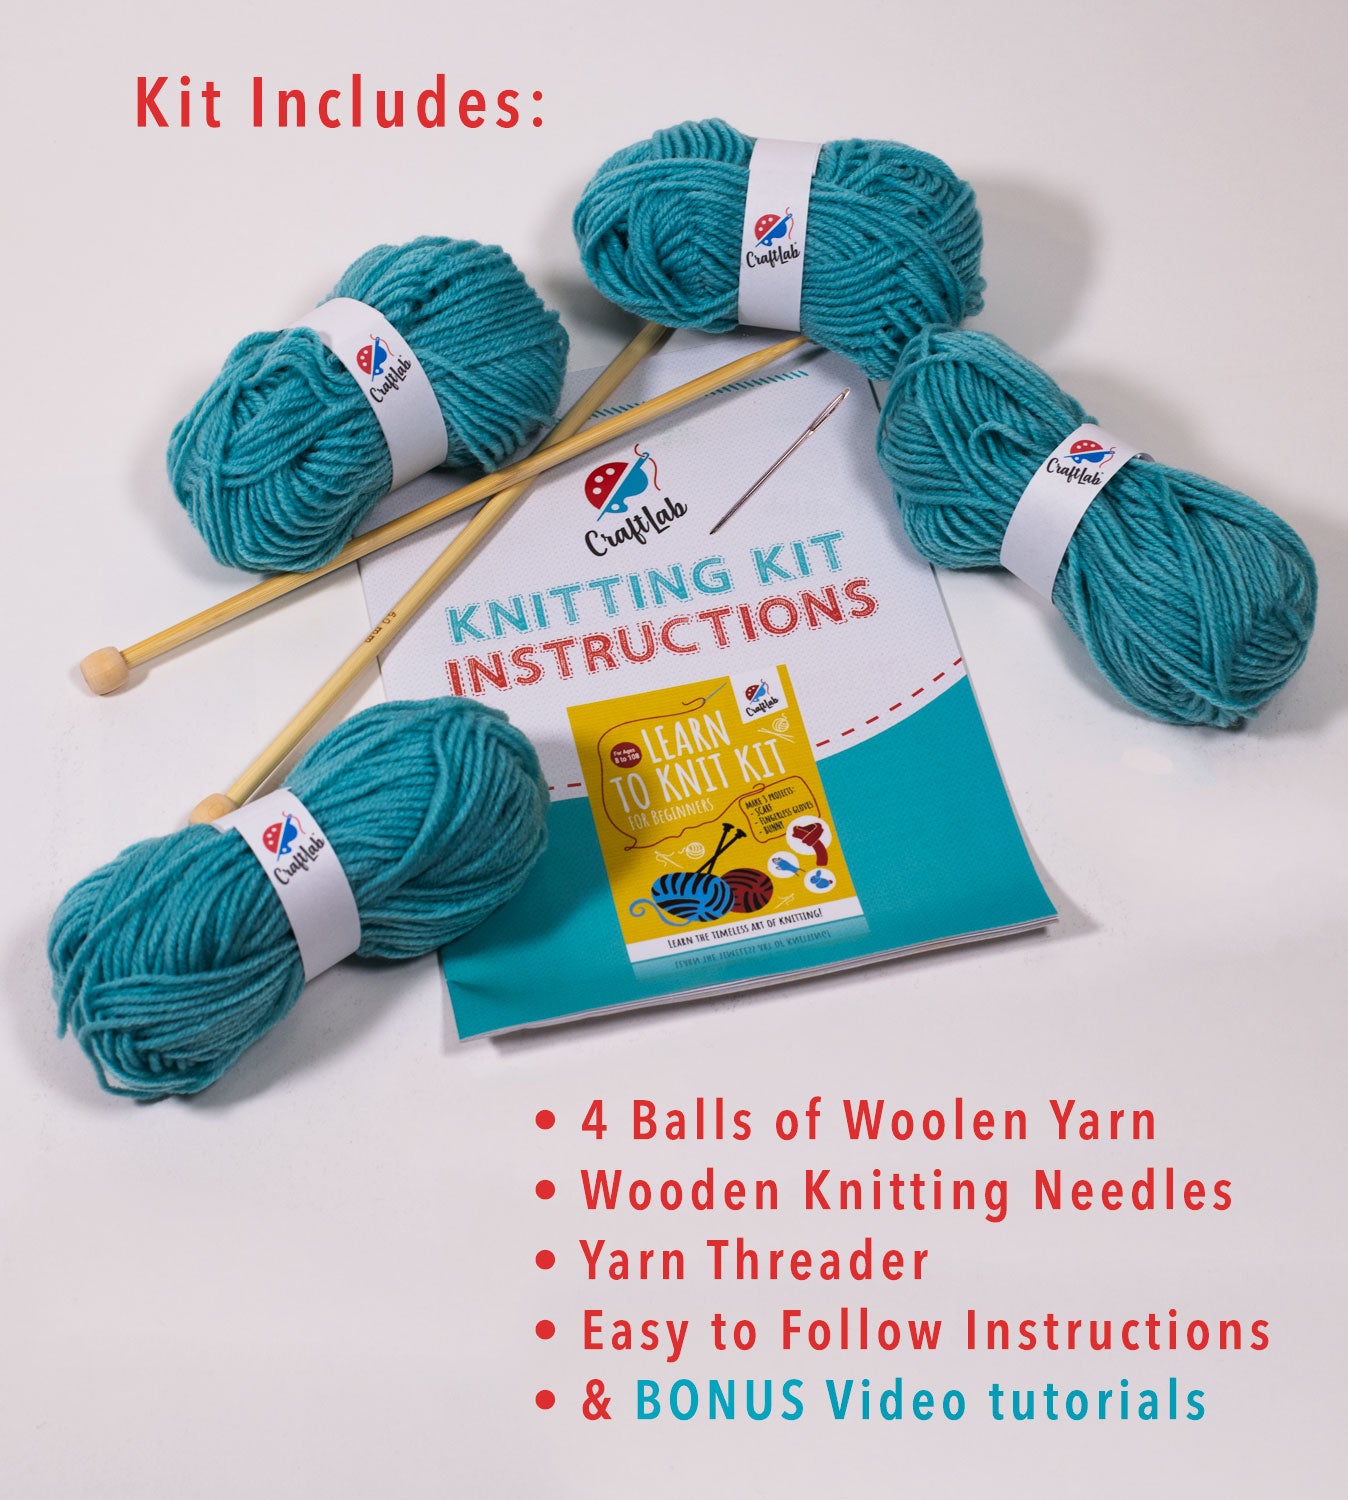 Learn to Knit Kit  Beginner Beanie COD028 – Crumbz Craft